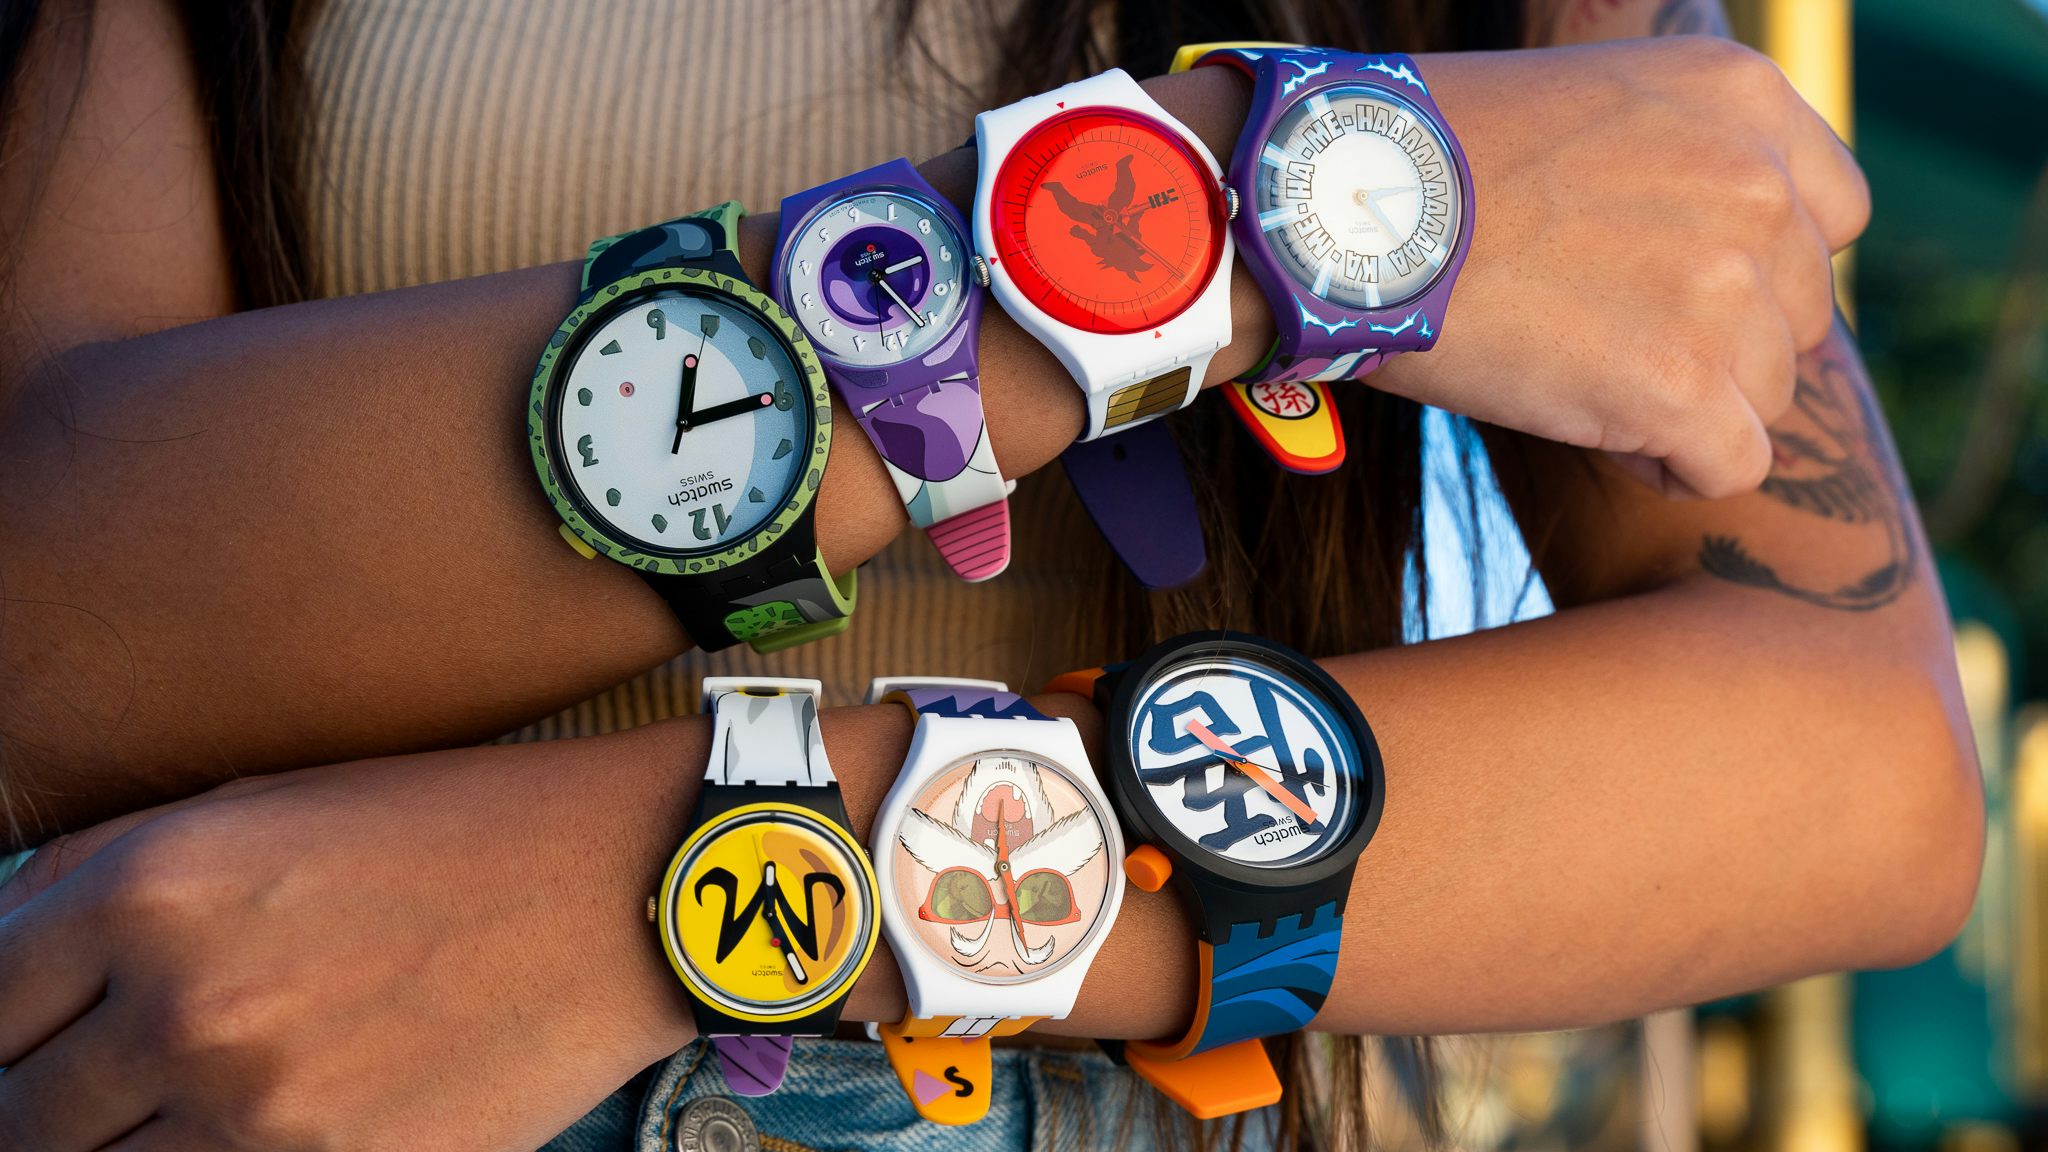 swatch watches logo